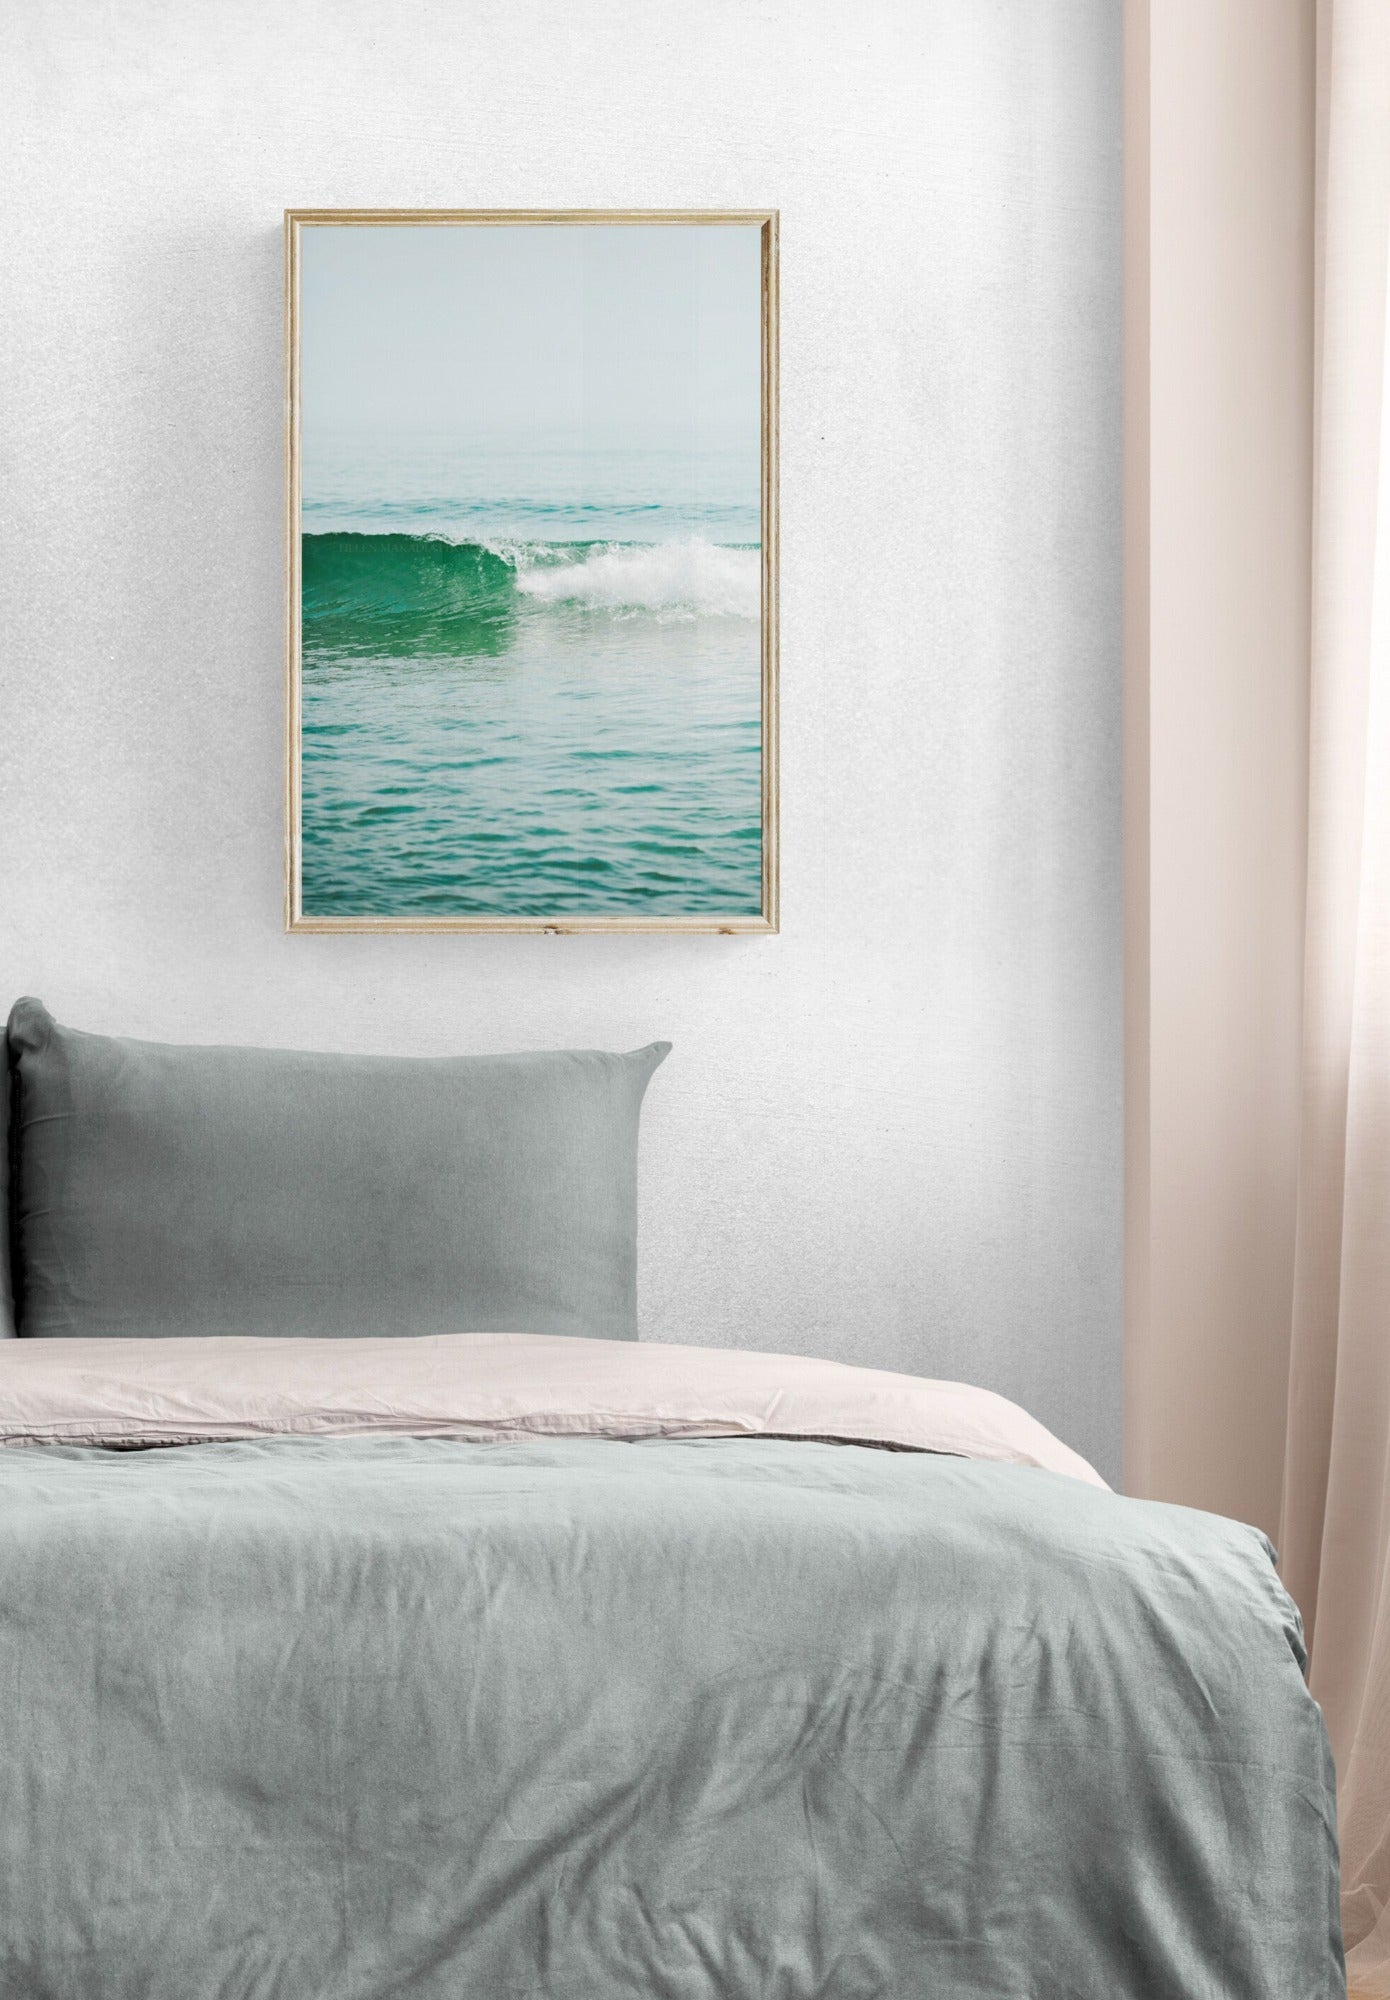 Cape Cod Atlantic Ocean Wave as Wall Art in a Bedroom